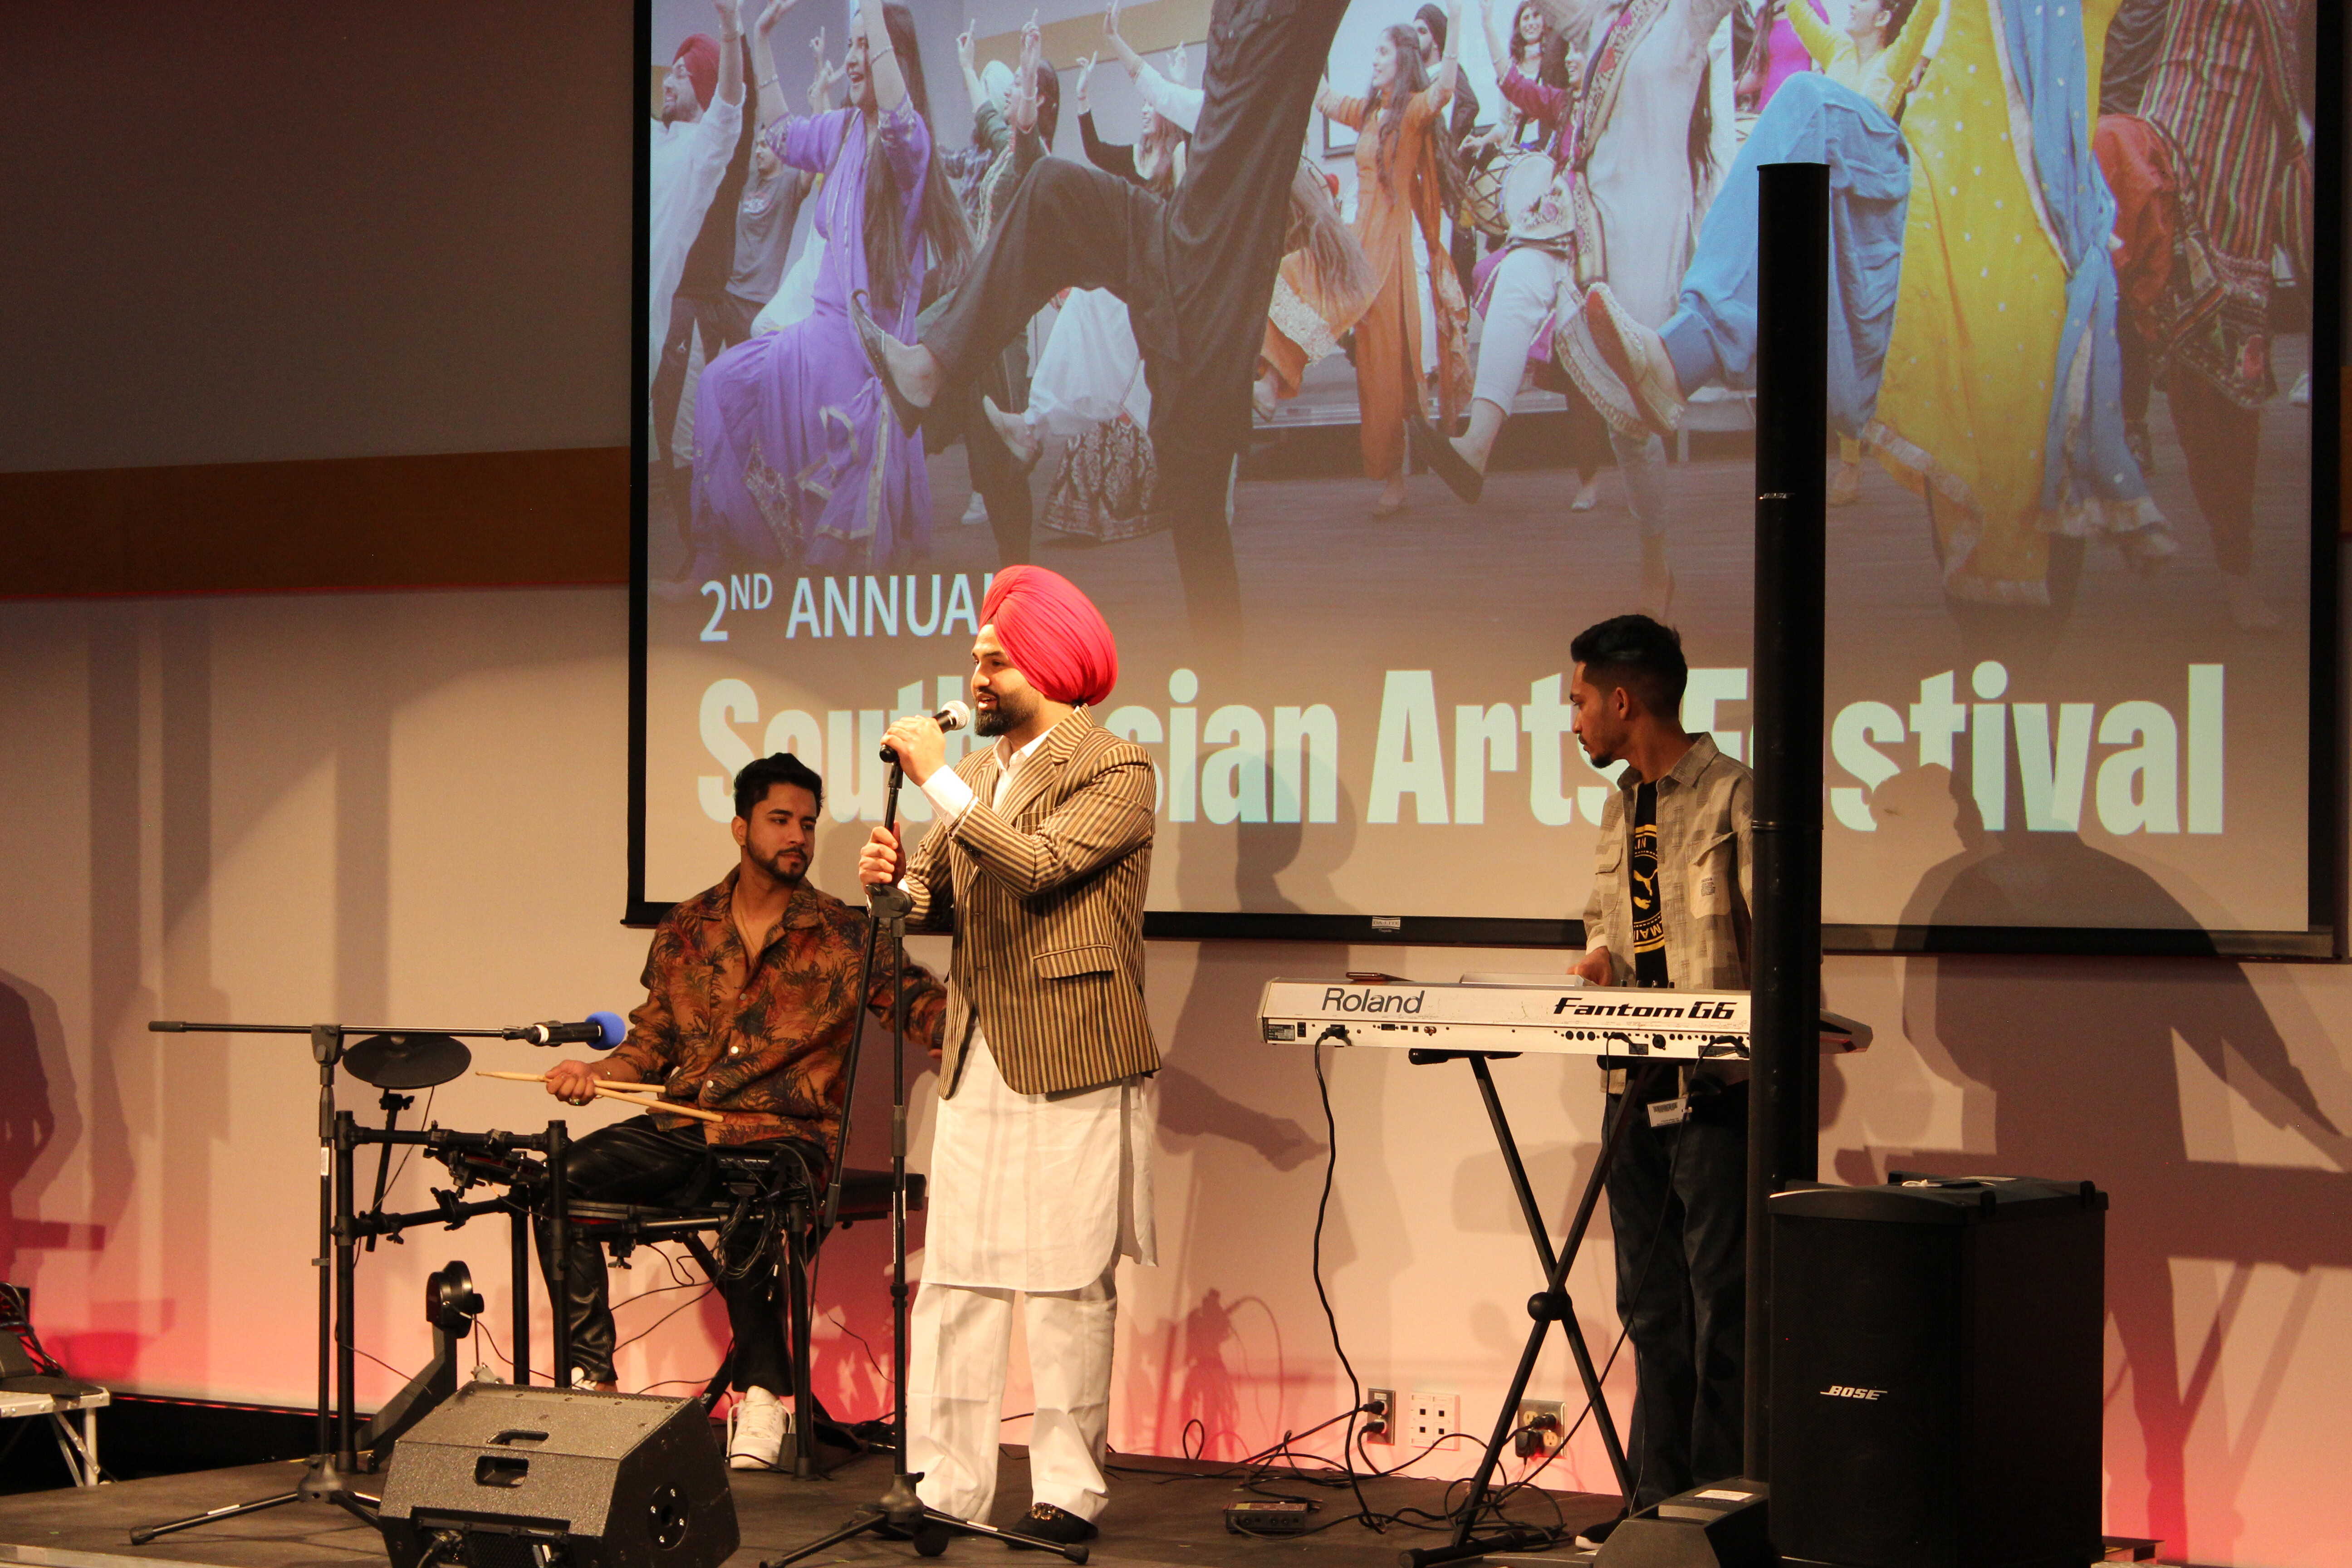 Jobanpreet Singh's performance